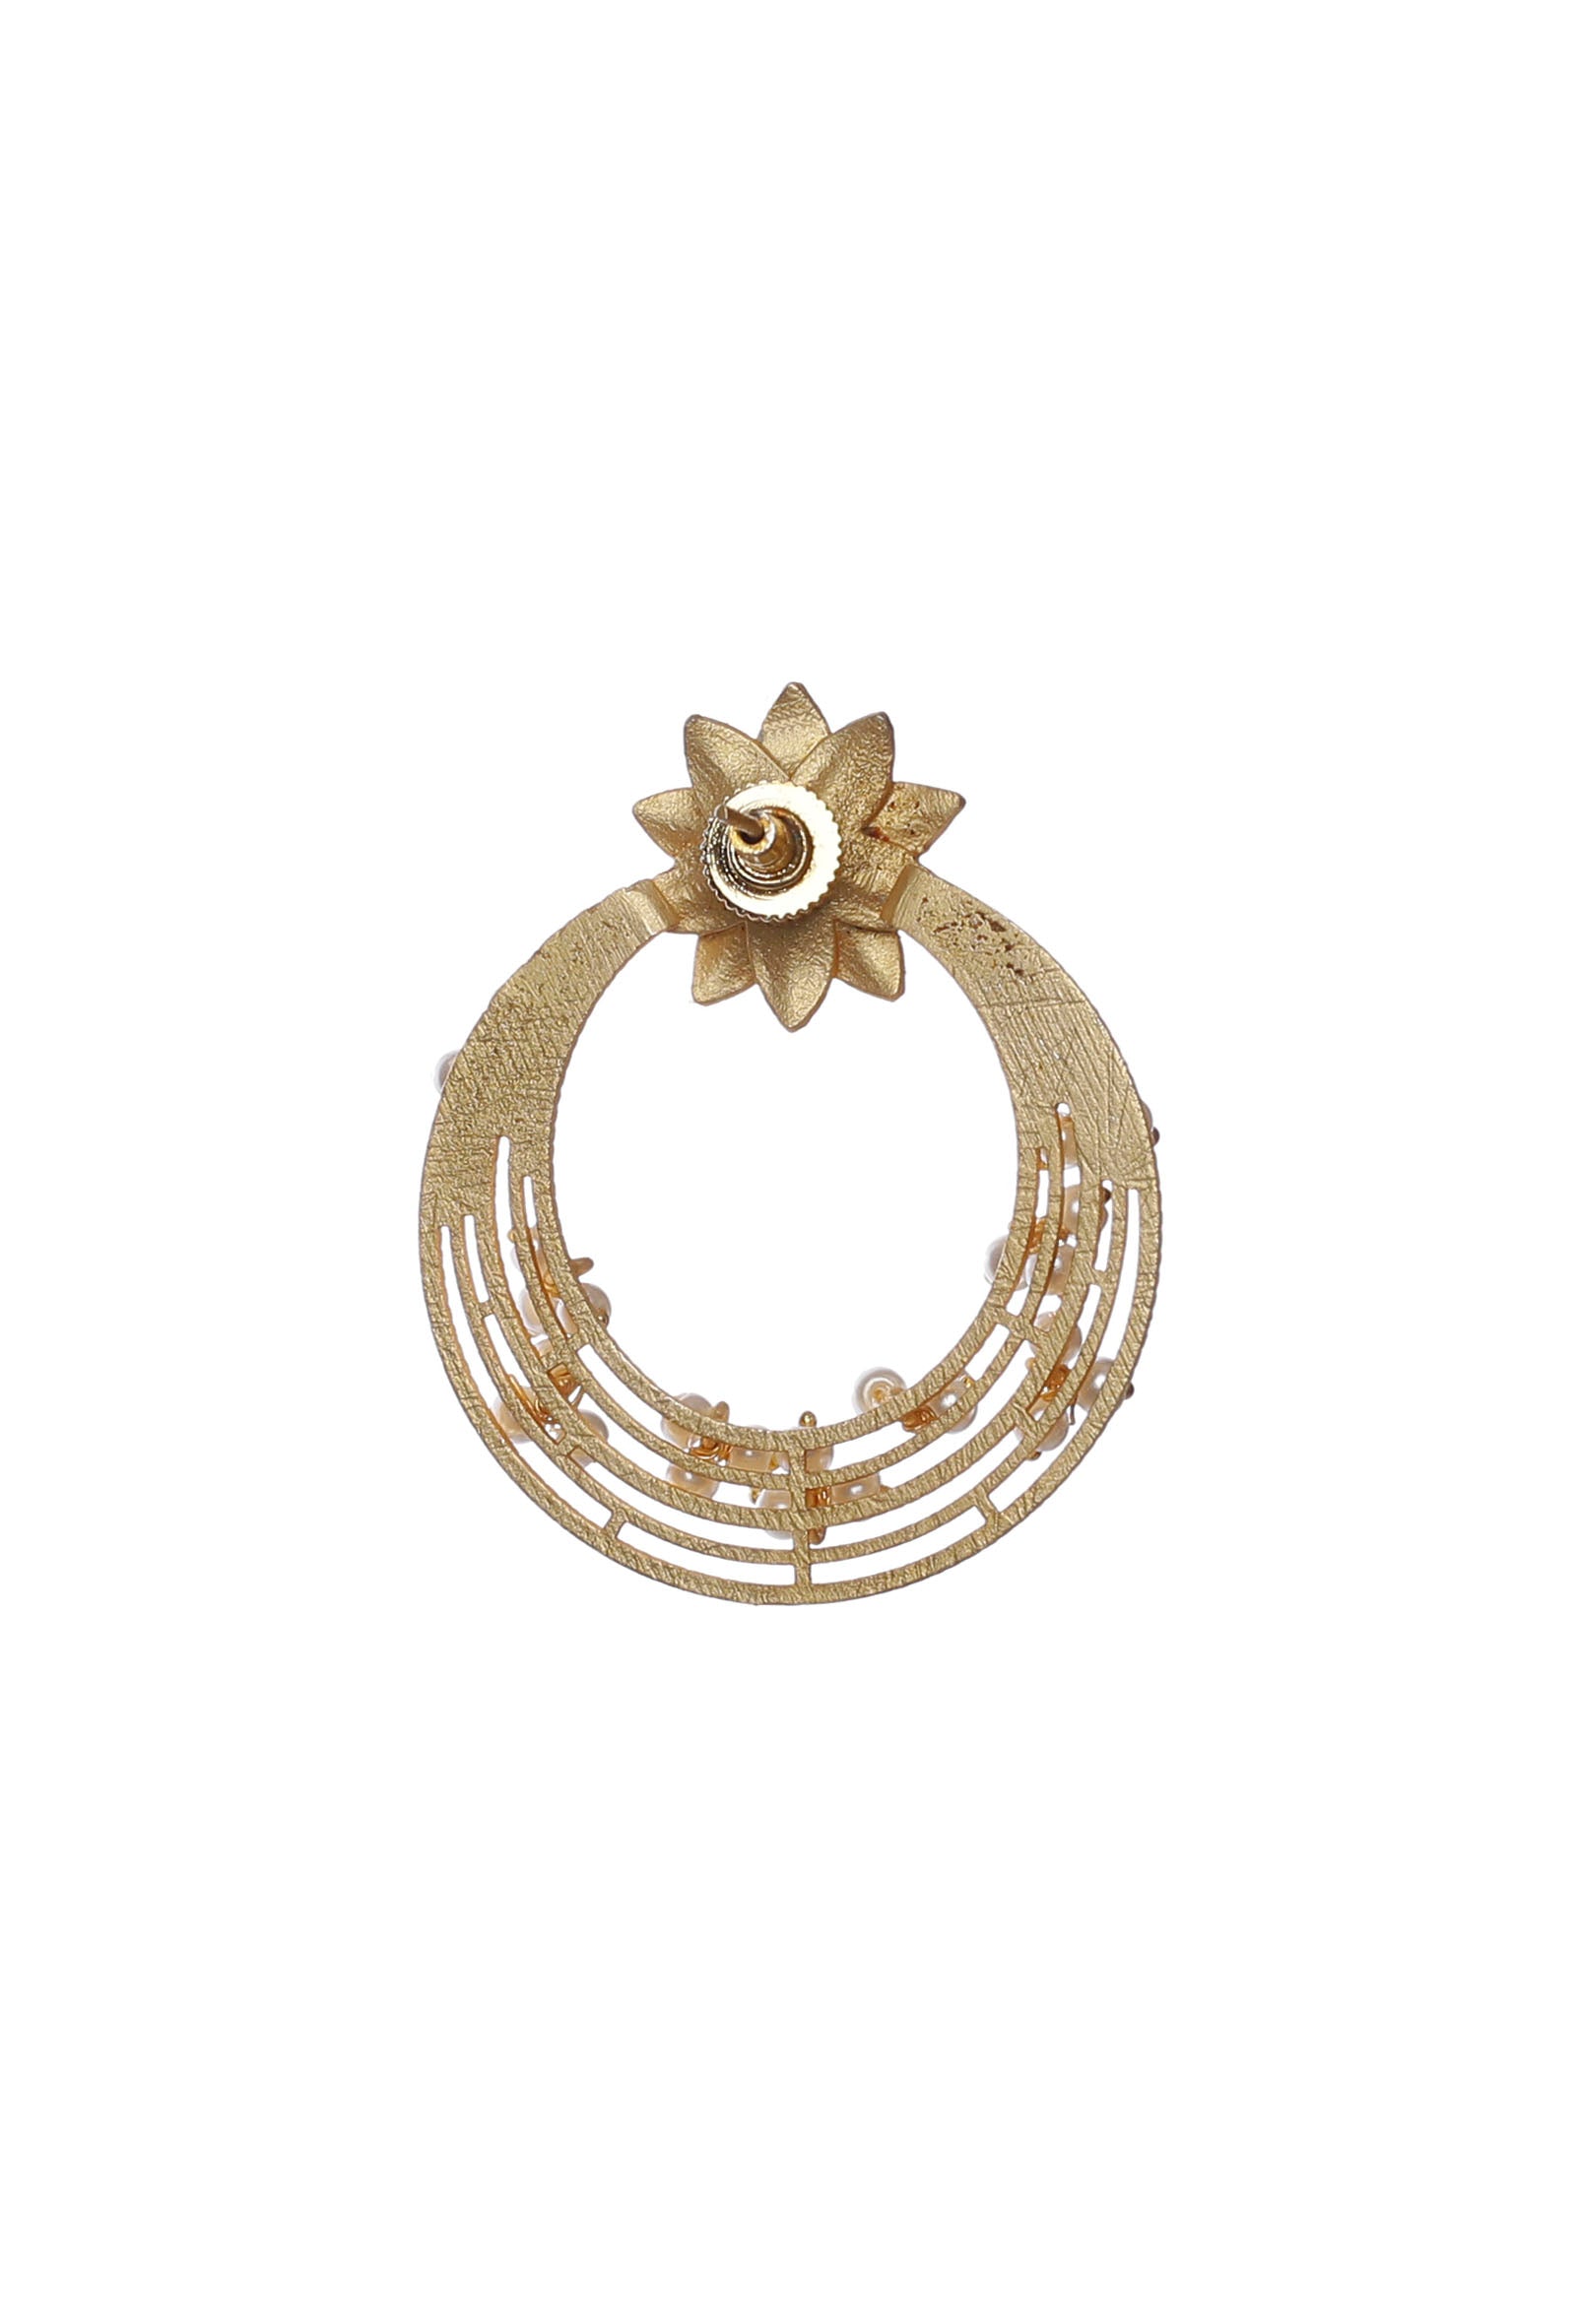 Starkle Gold Embellished Earrings